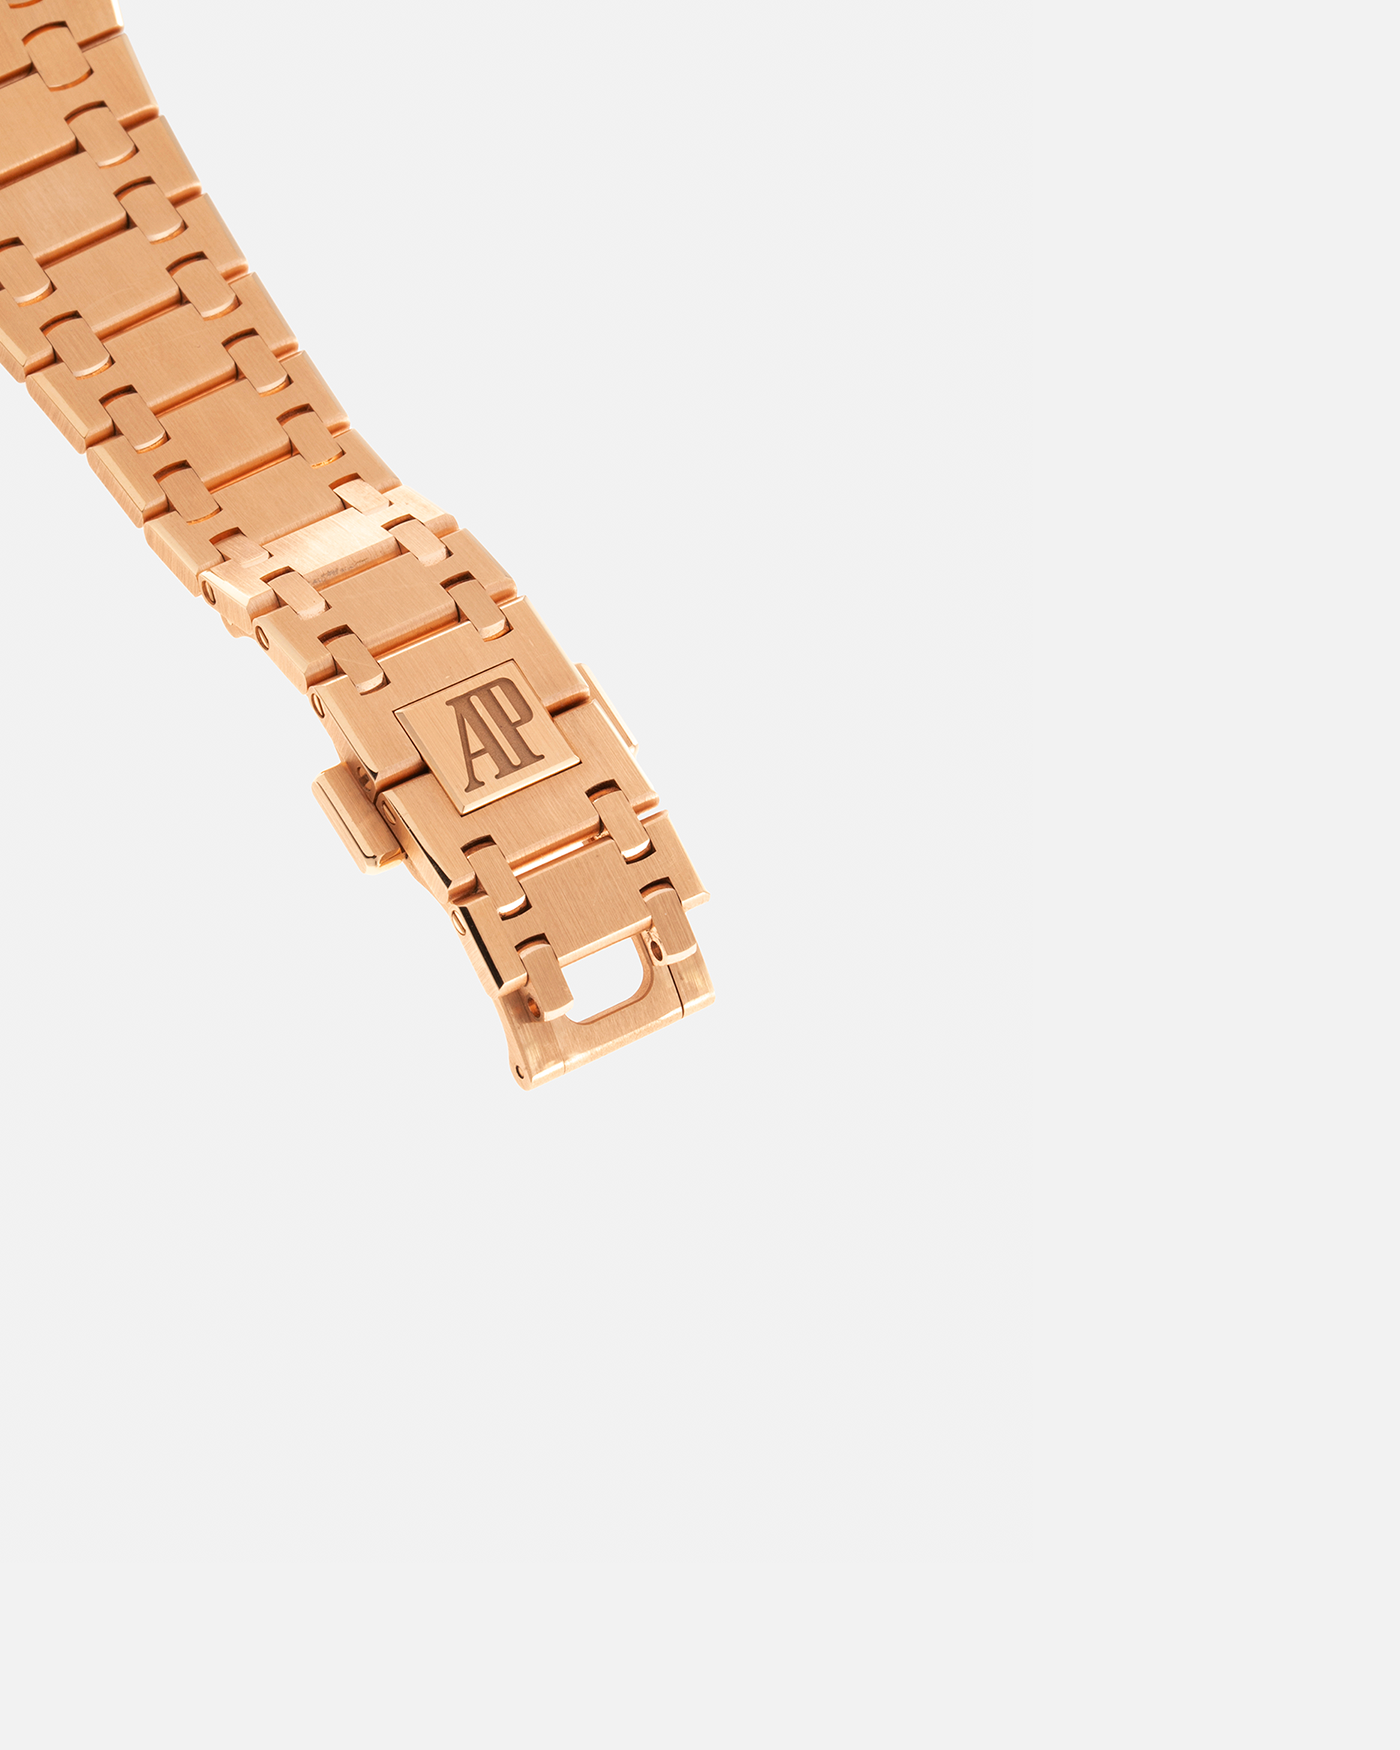 Brand: Audemars Piguet Year: 2019 Model: Royal Oak Reference Number: 15202OR.OO.1240OR.01.A Material:18-carat Pink Gold Movement: Audemars Piguet Cal. 2121 (JLC-derived), Self-Winding Case Dimensions: 39mm x 8.1mm Bracelet: Audemars Piguet 18-carat Pink Gold Integrated Bracelet